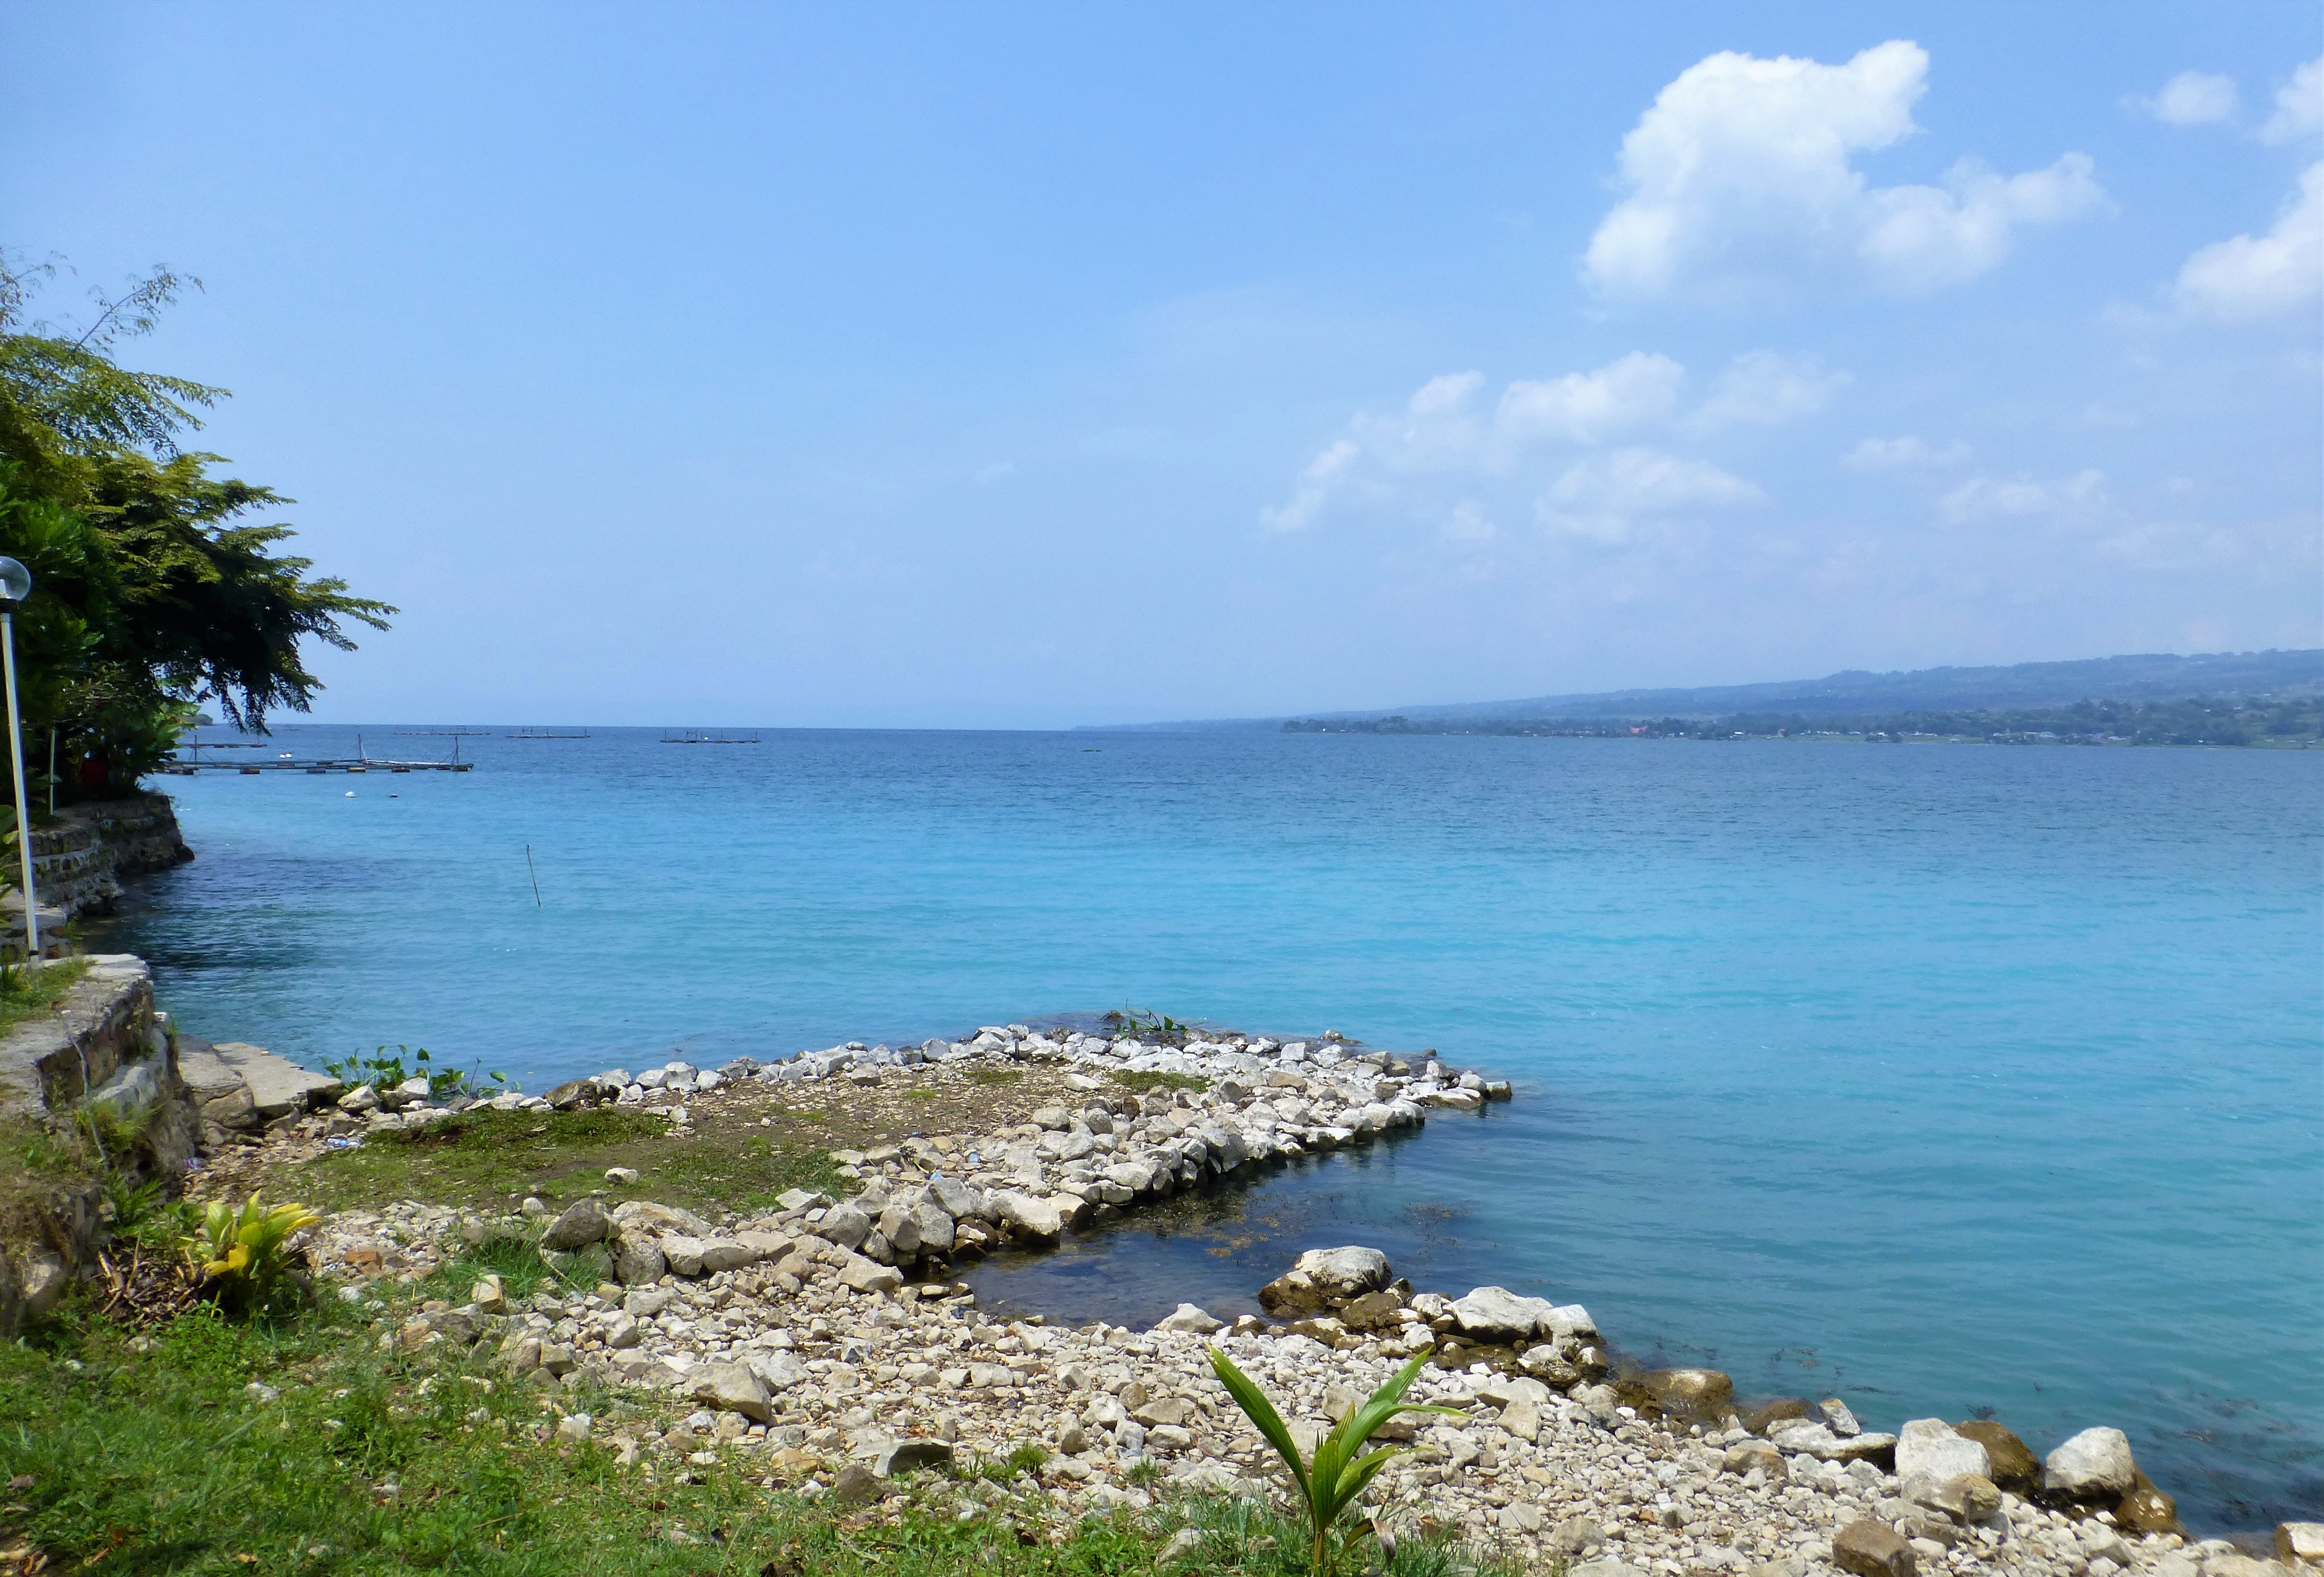 Travel Guide Samosir Island - Go Swim in Lake Toba - Sumatra, Indonesia